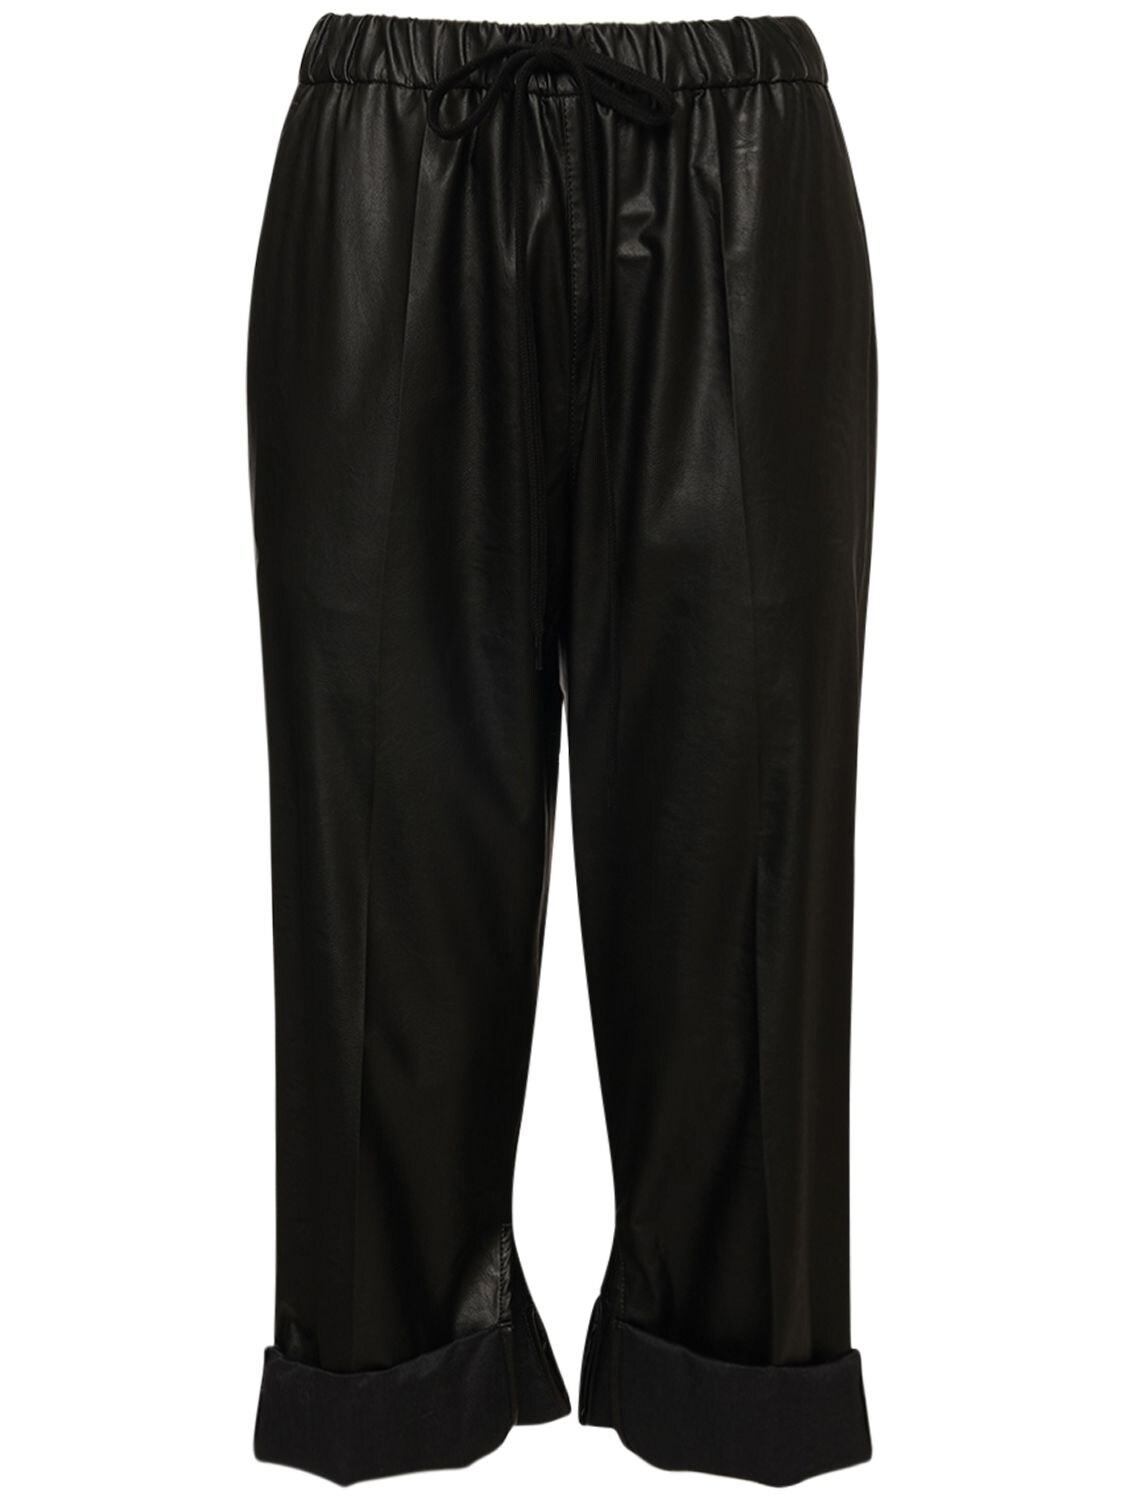 Mm6 Maison Margiela Cropped Faux Leather Pants W/ Cuffs In Black | ModeSens